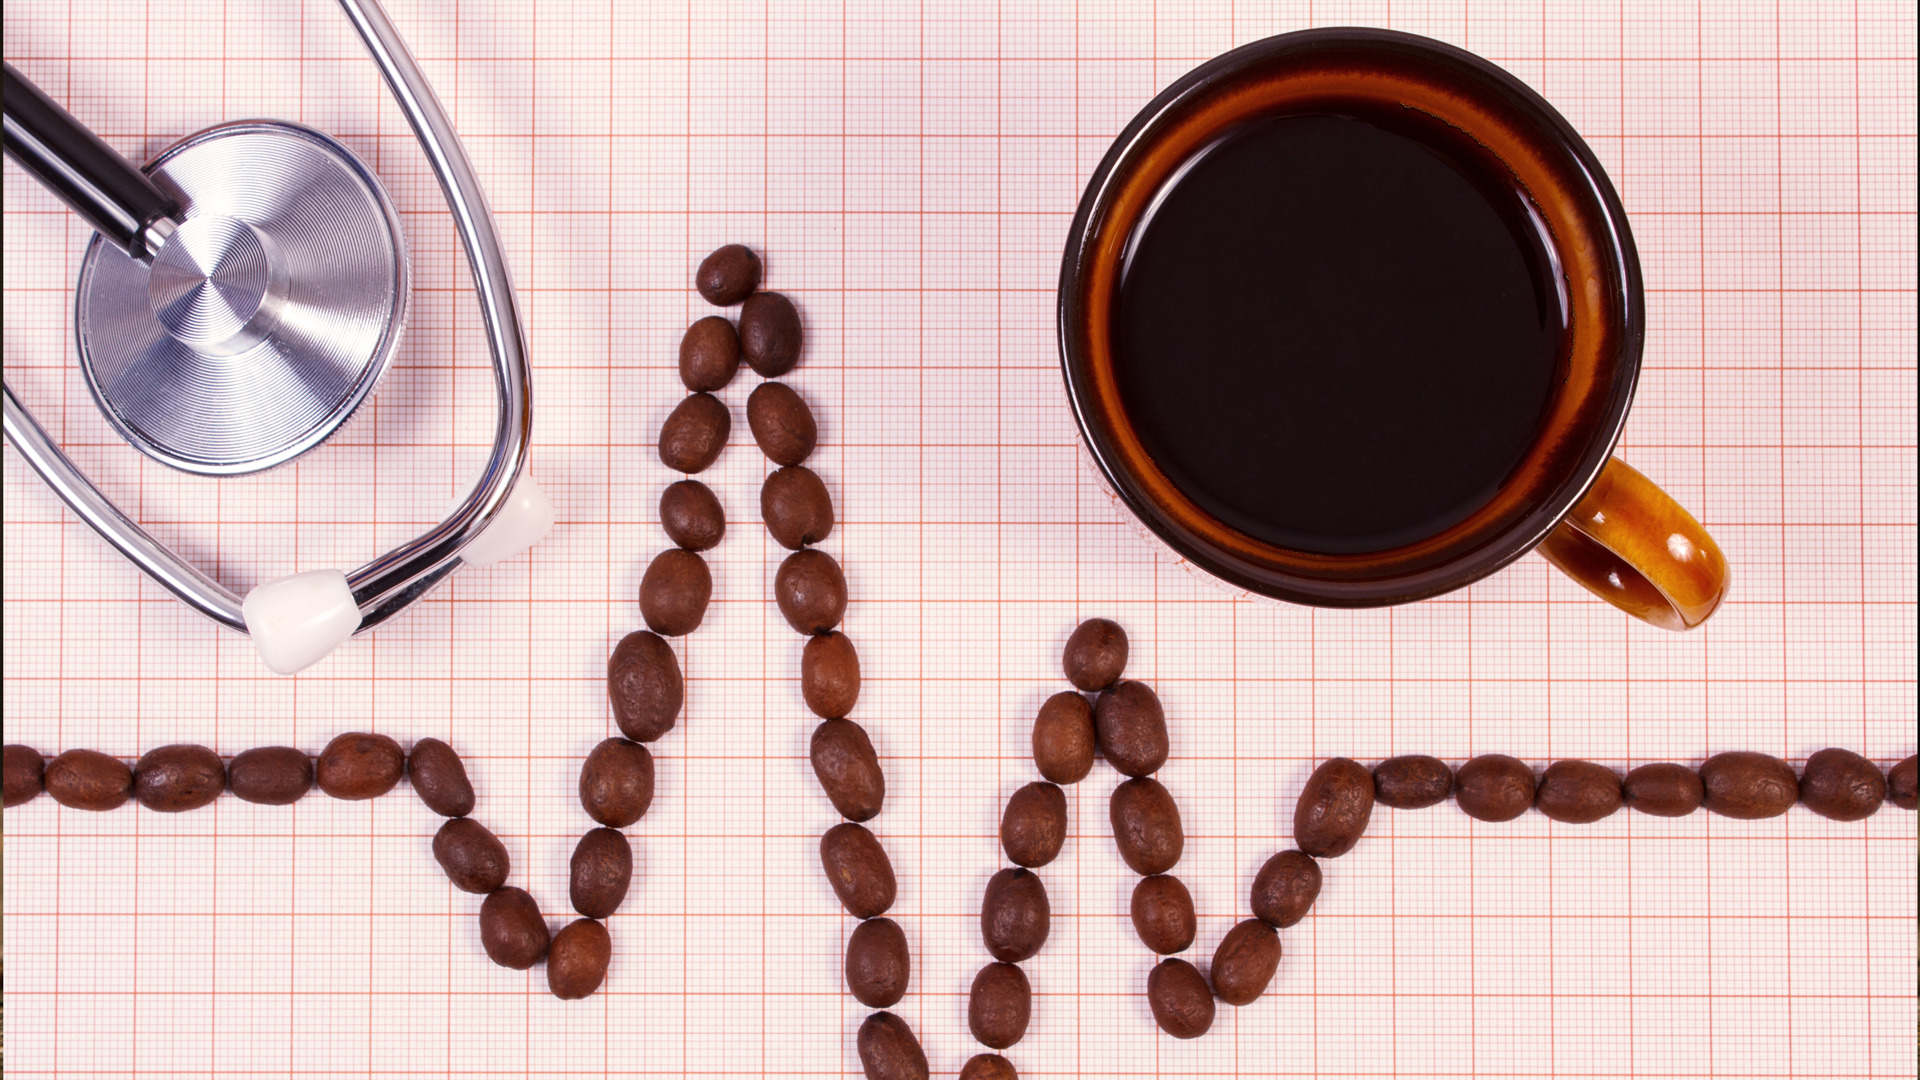 Исследование кофеина. Кофе. Кофе в медицине. Кофеин. Влияние кофе на организм человека картинки.